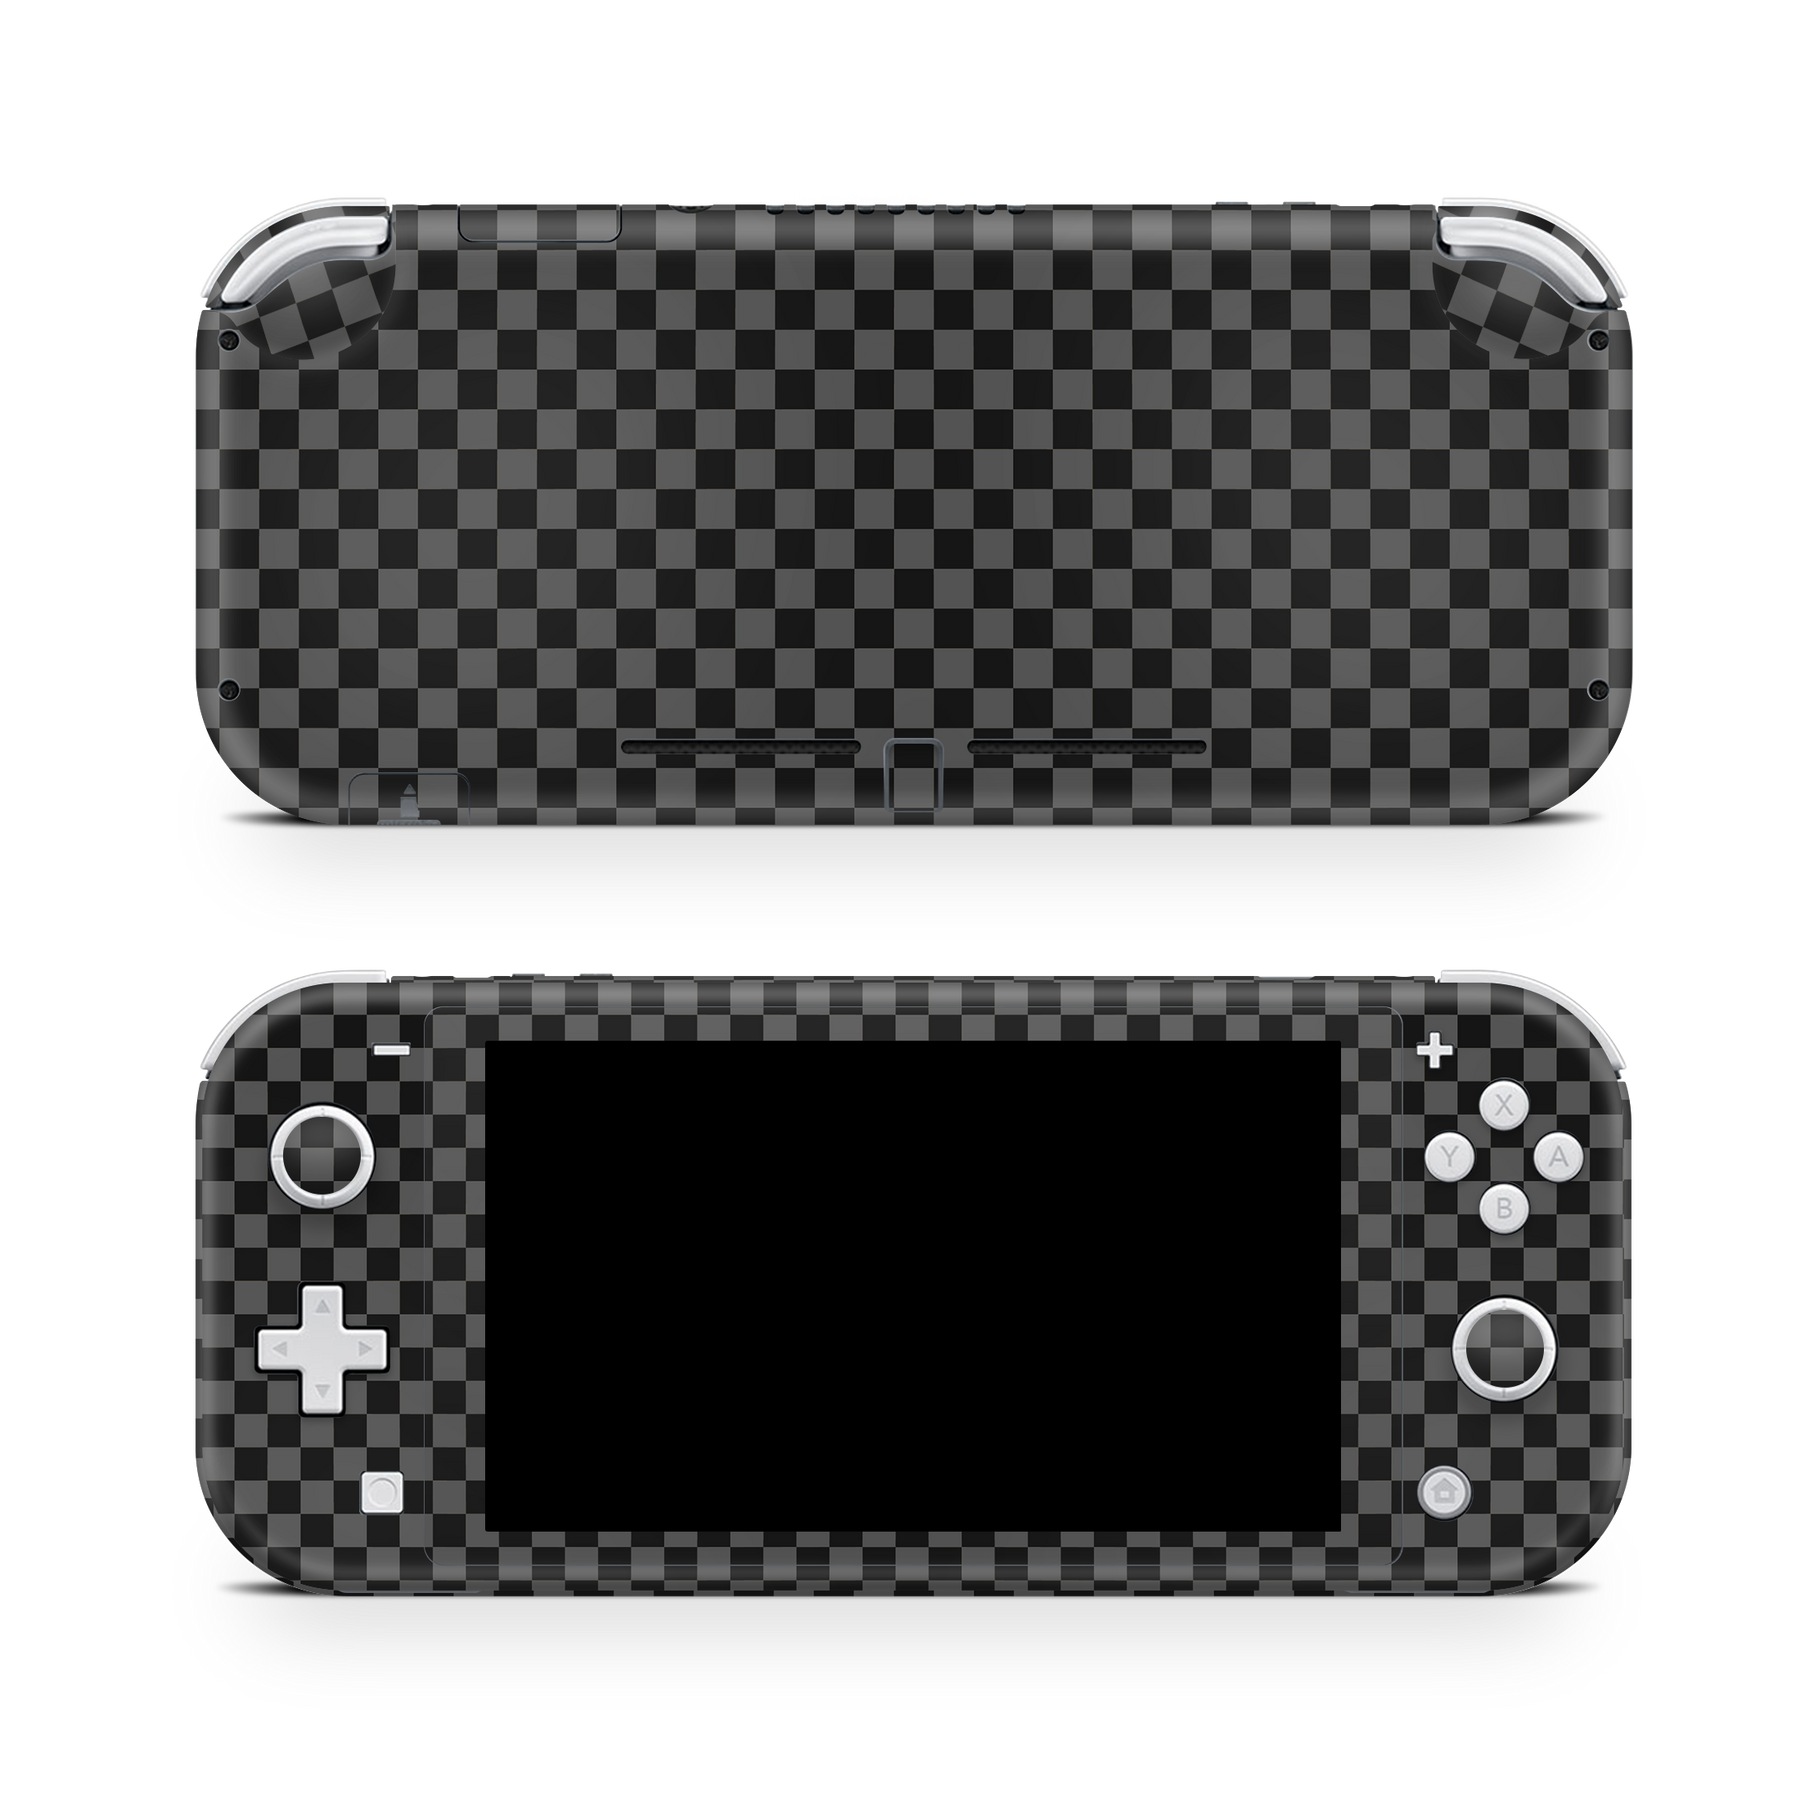 Nintendo Switch LITE Checkers black